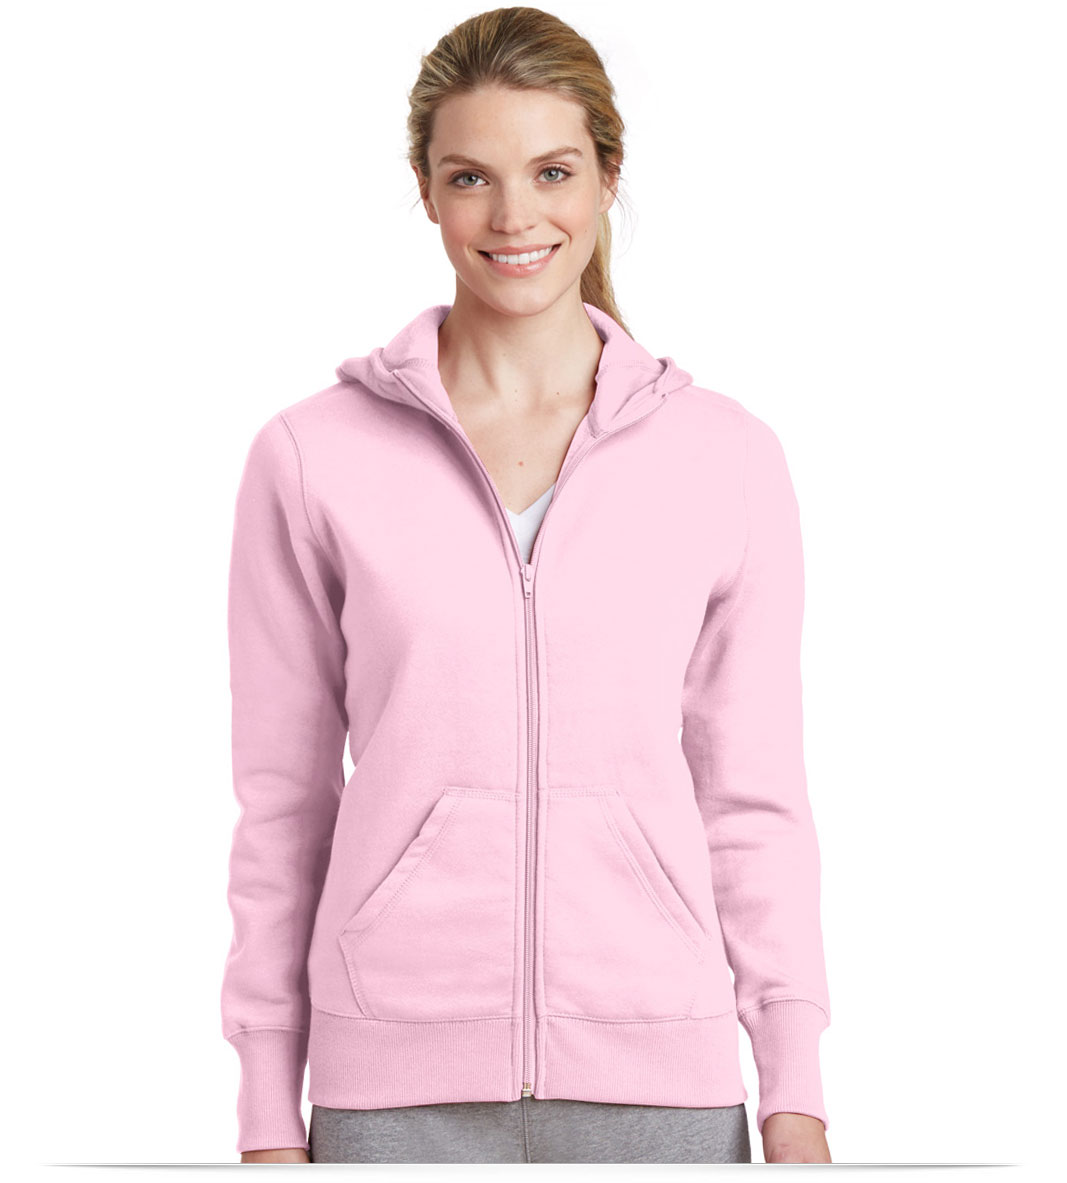 Embroidered Sport-Tek Ladies Full-Zip Hooded Fleece Jacket